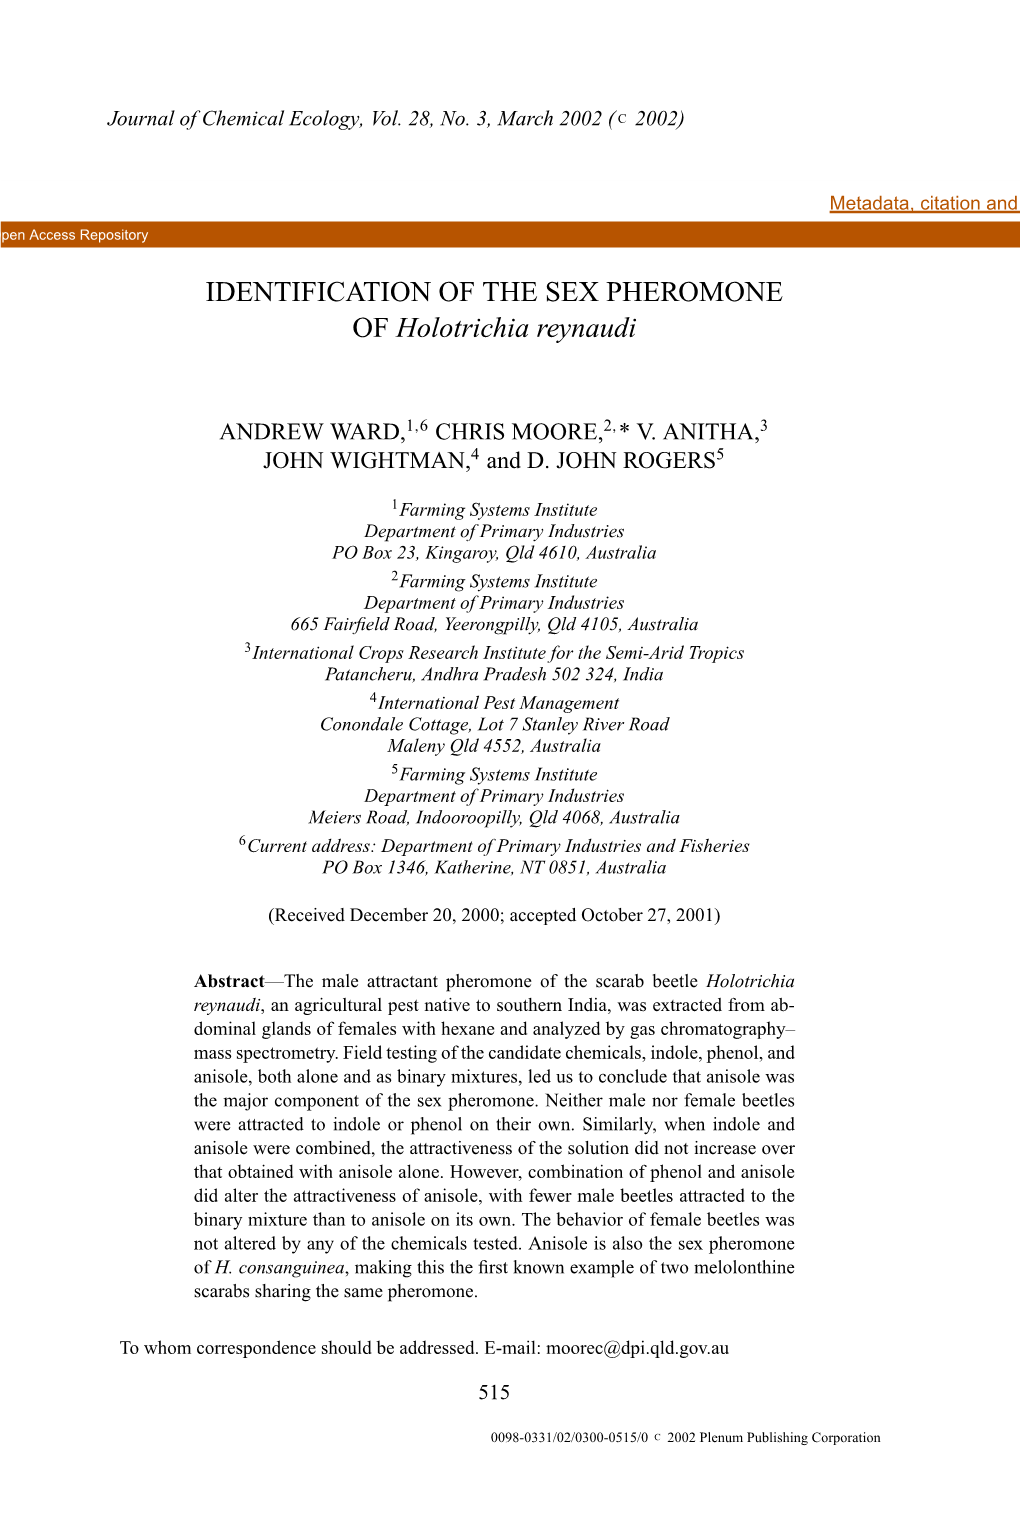 IDENTIFICATION of the SEX PHEROMONE of Holotrichia Reynaudi